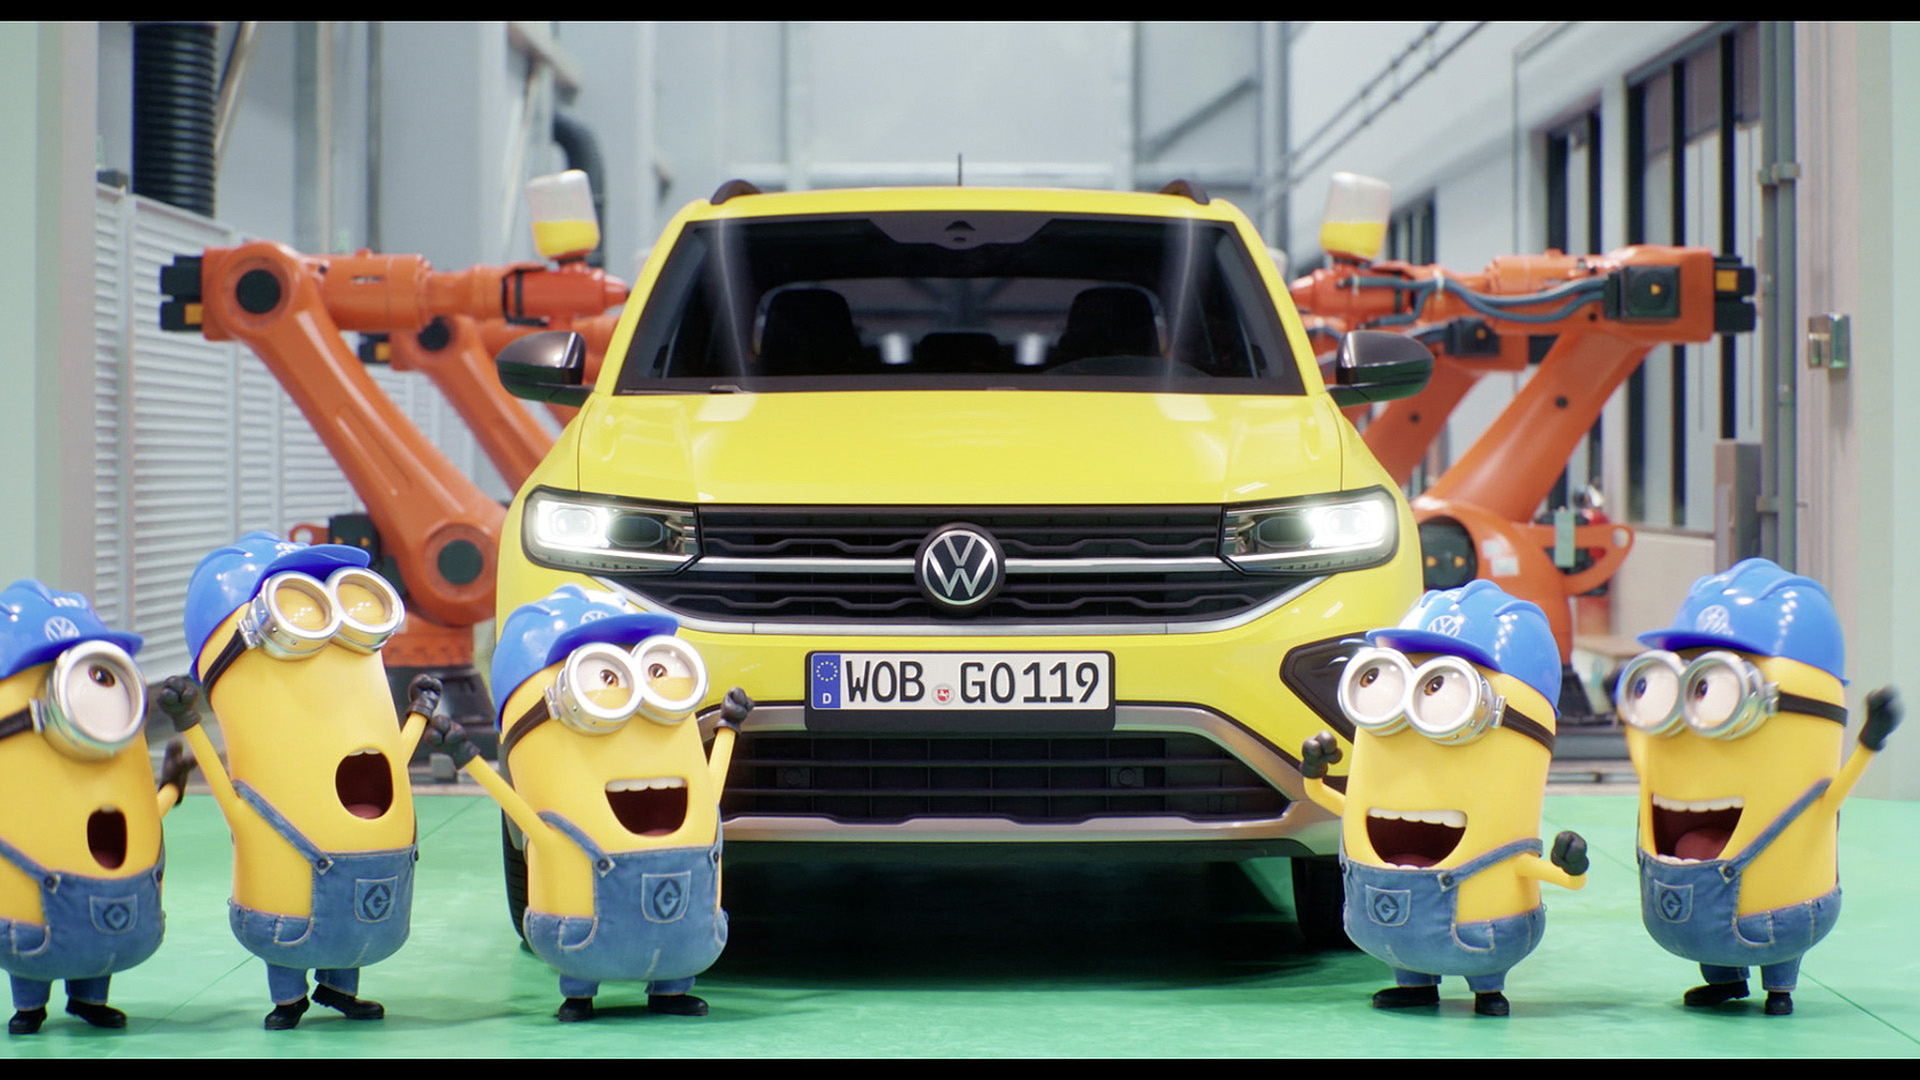 Volkswagen Announces Partnership With Illumination’s Despicabl